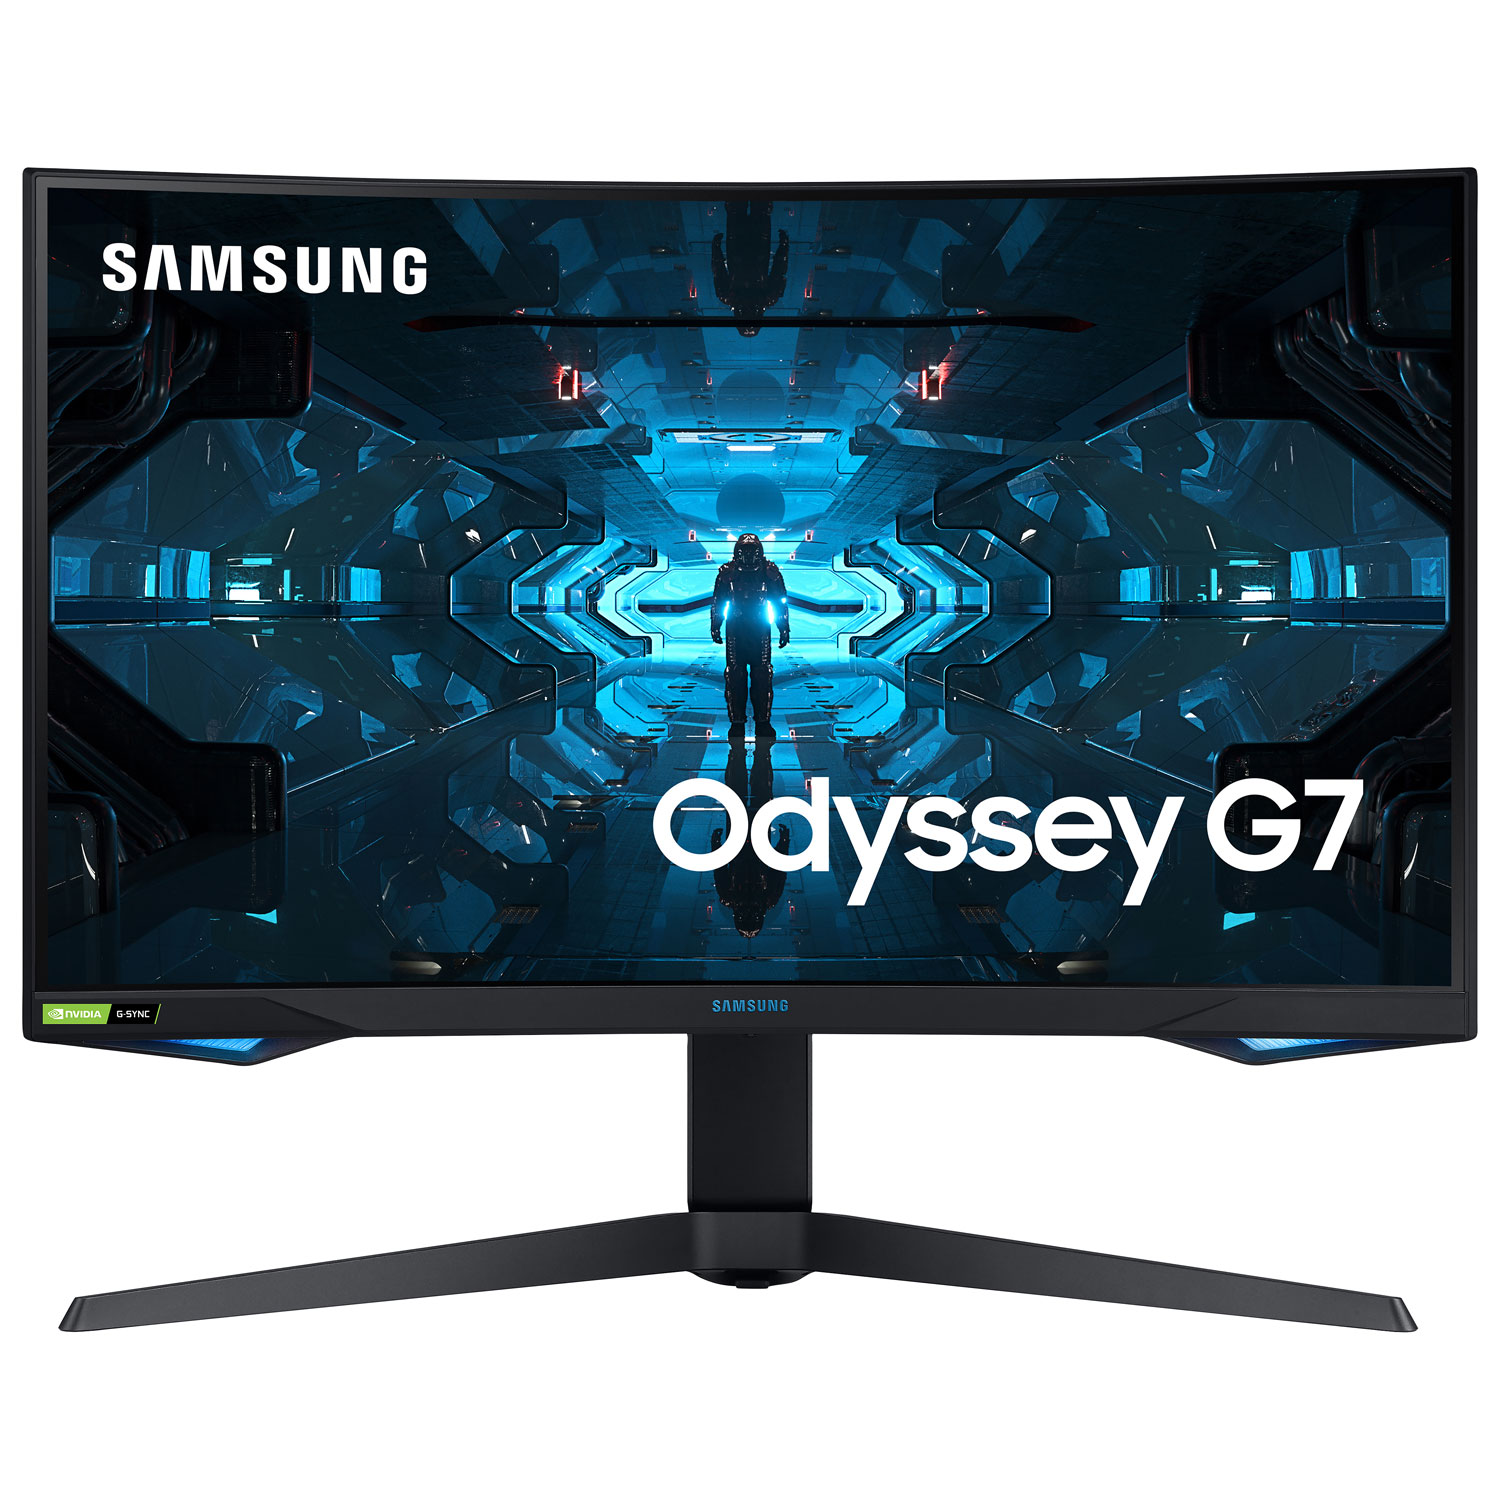 Samsung Odyssey G7 32" WQHD 240Hz 1ms GTG Curved VA LED G-Sync Gaming Monitor (LC32G75TQSNXZA) - Black